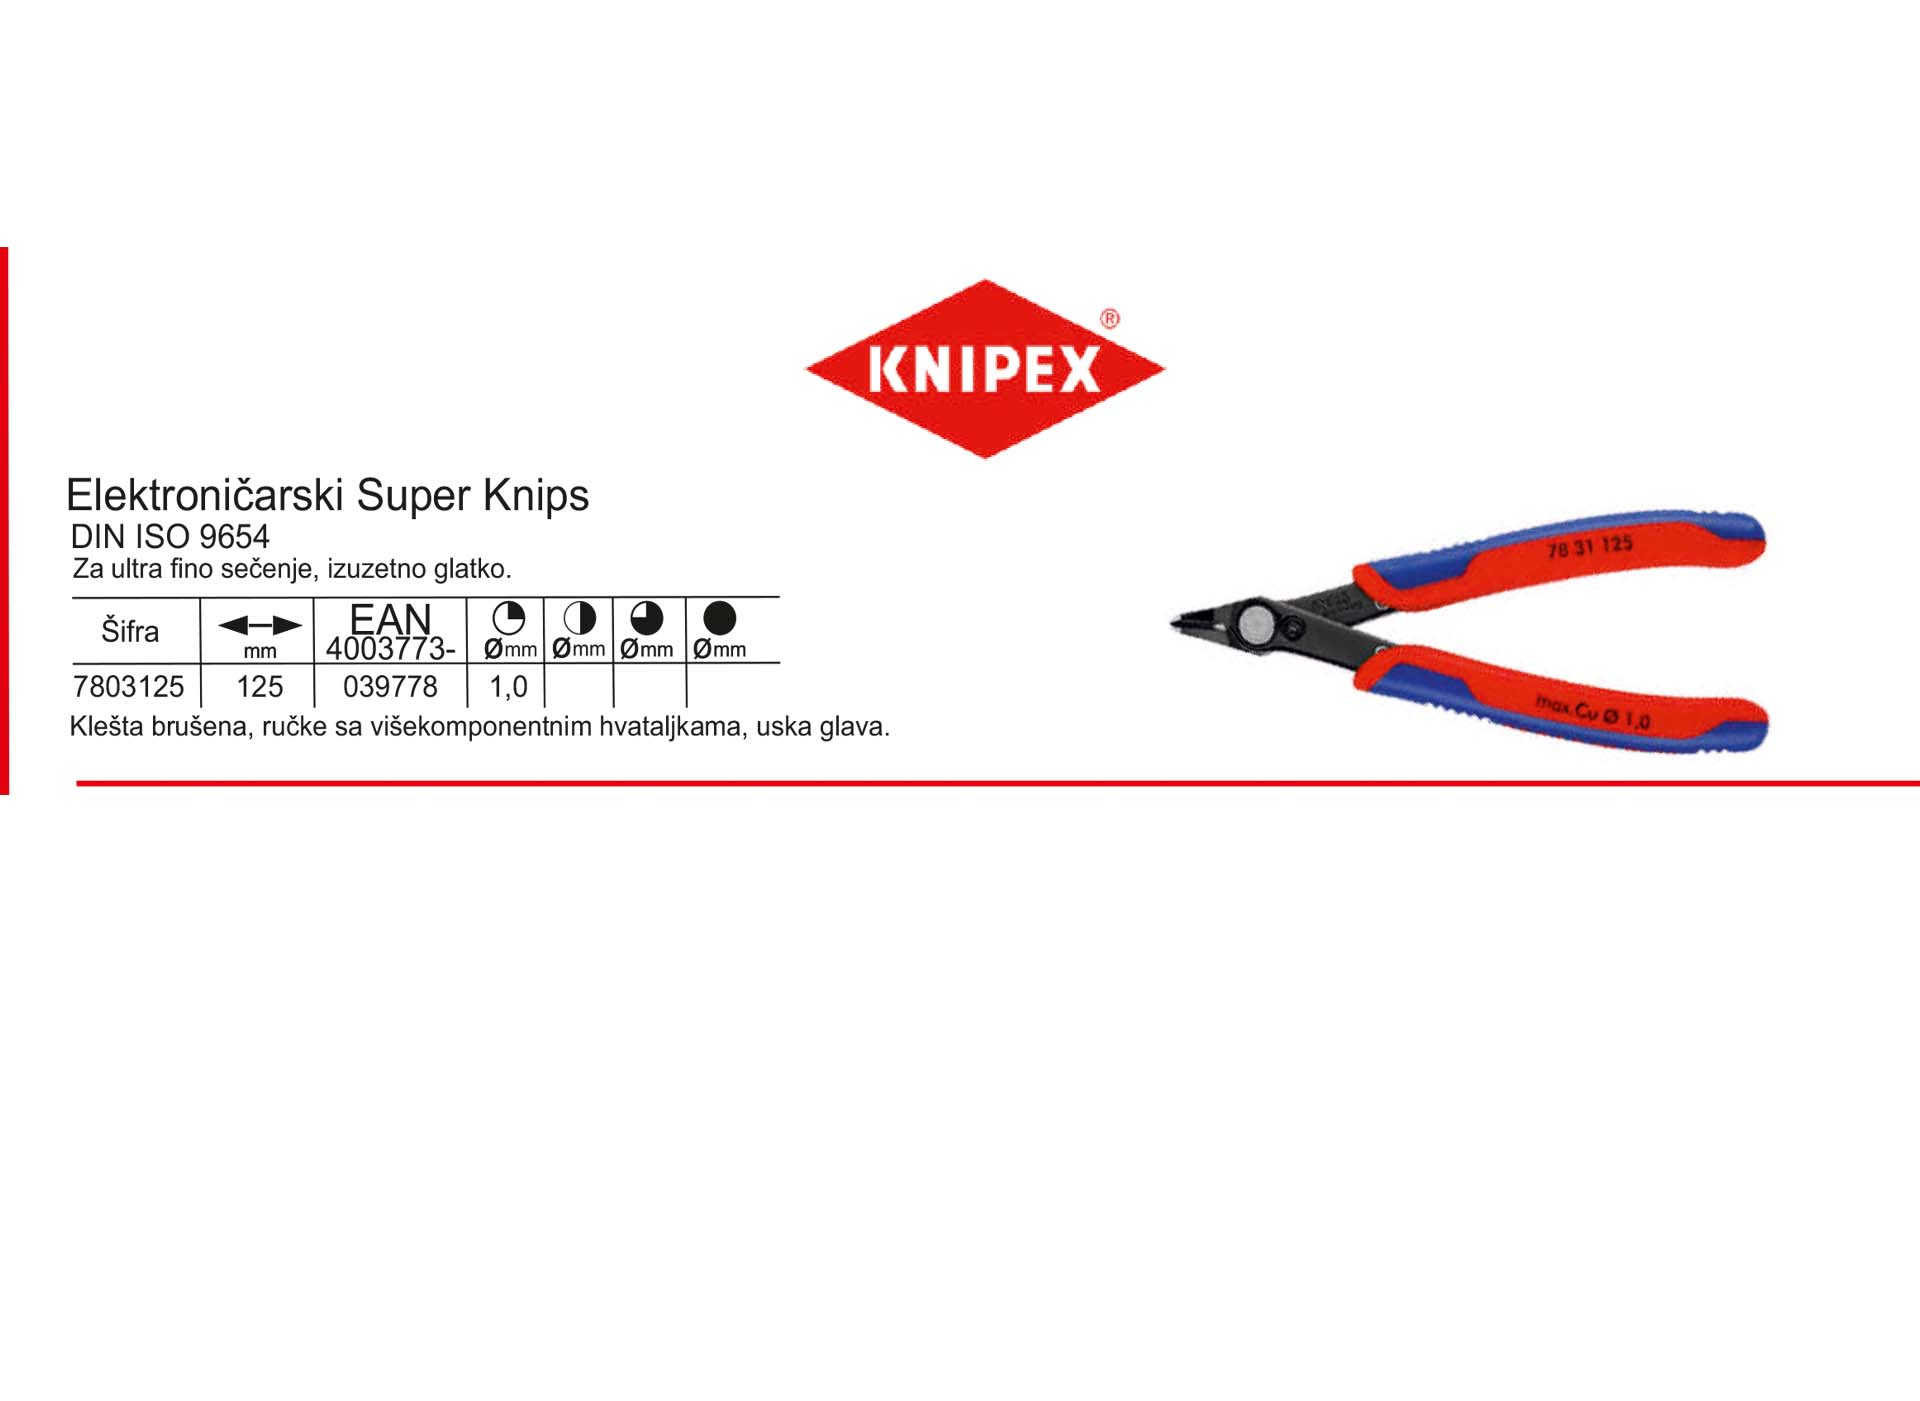 Elektroničarski Super Knips